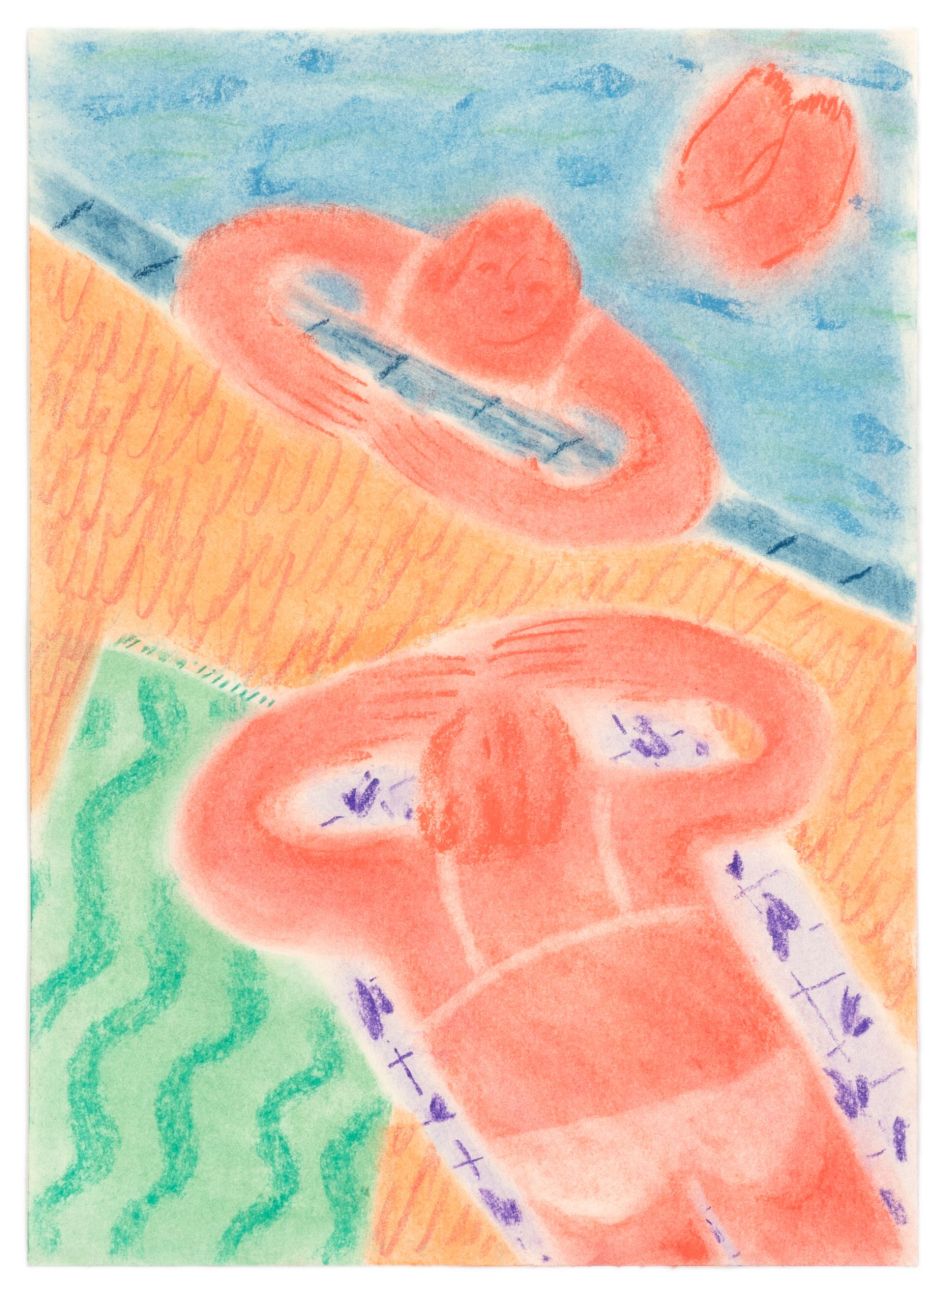 Coline Marotta, Untitled 3, 2019. Soft pastel & coloured pencil on paper